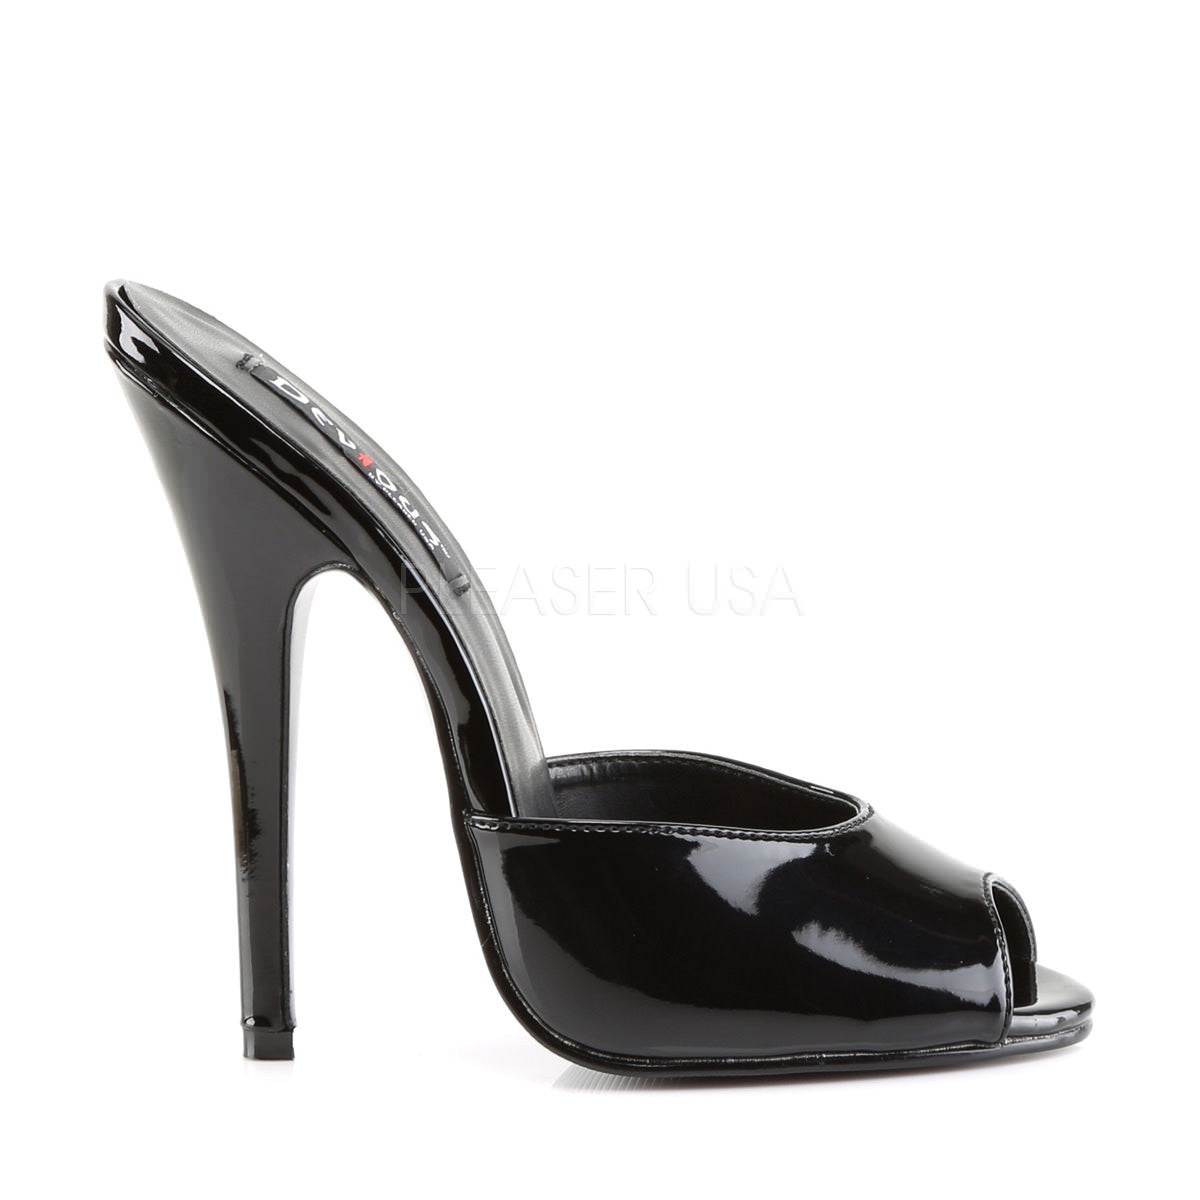 6 Inch Heel DOMINA-101 Black Patent